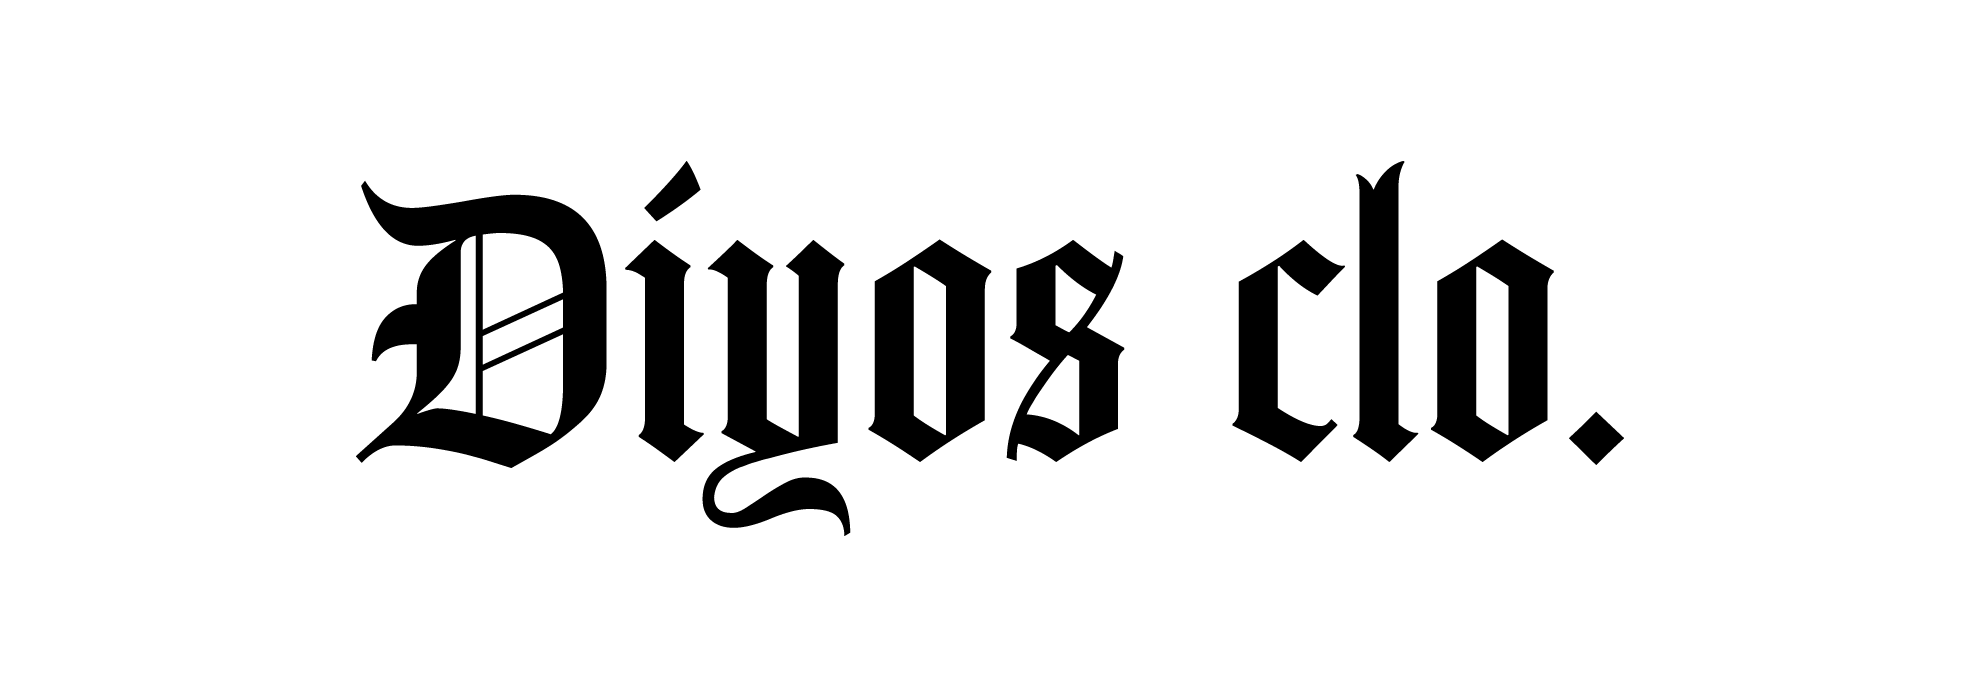 Diyos Clo Logo